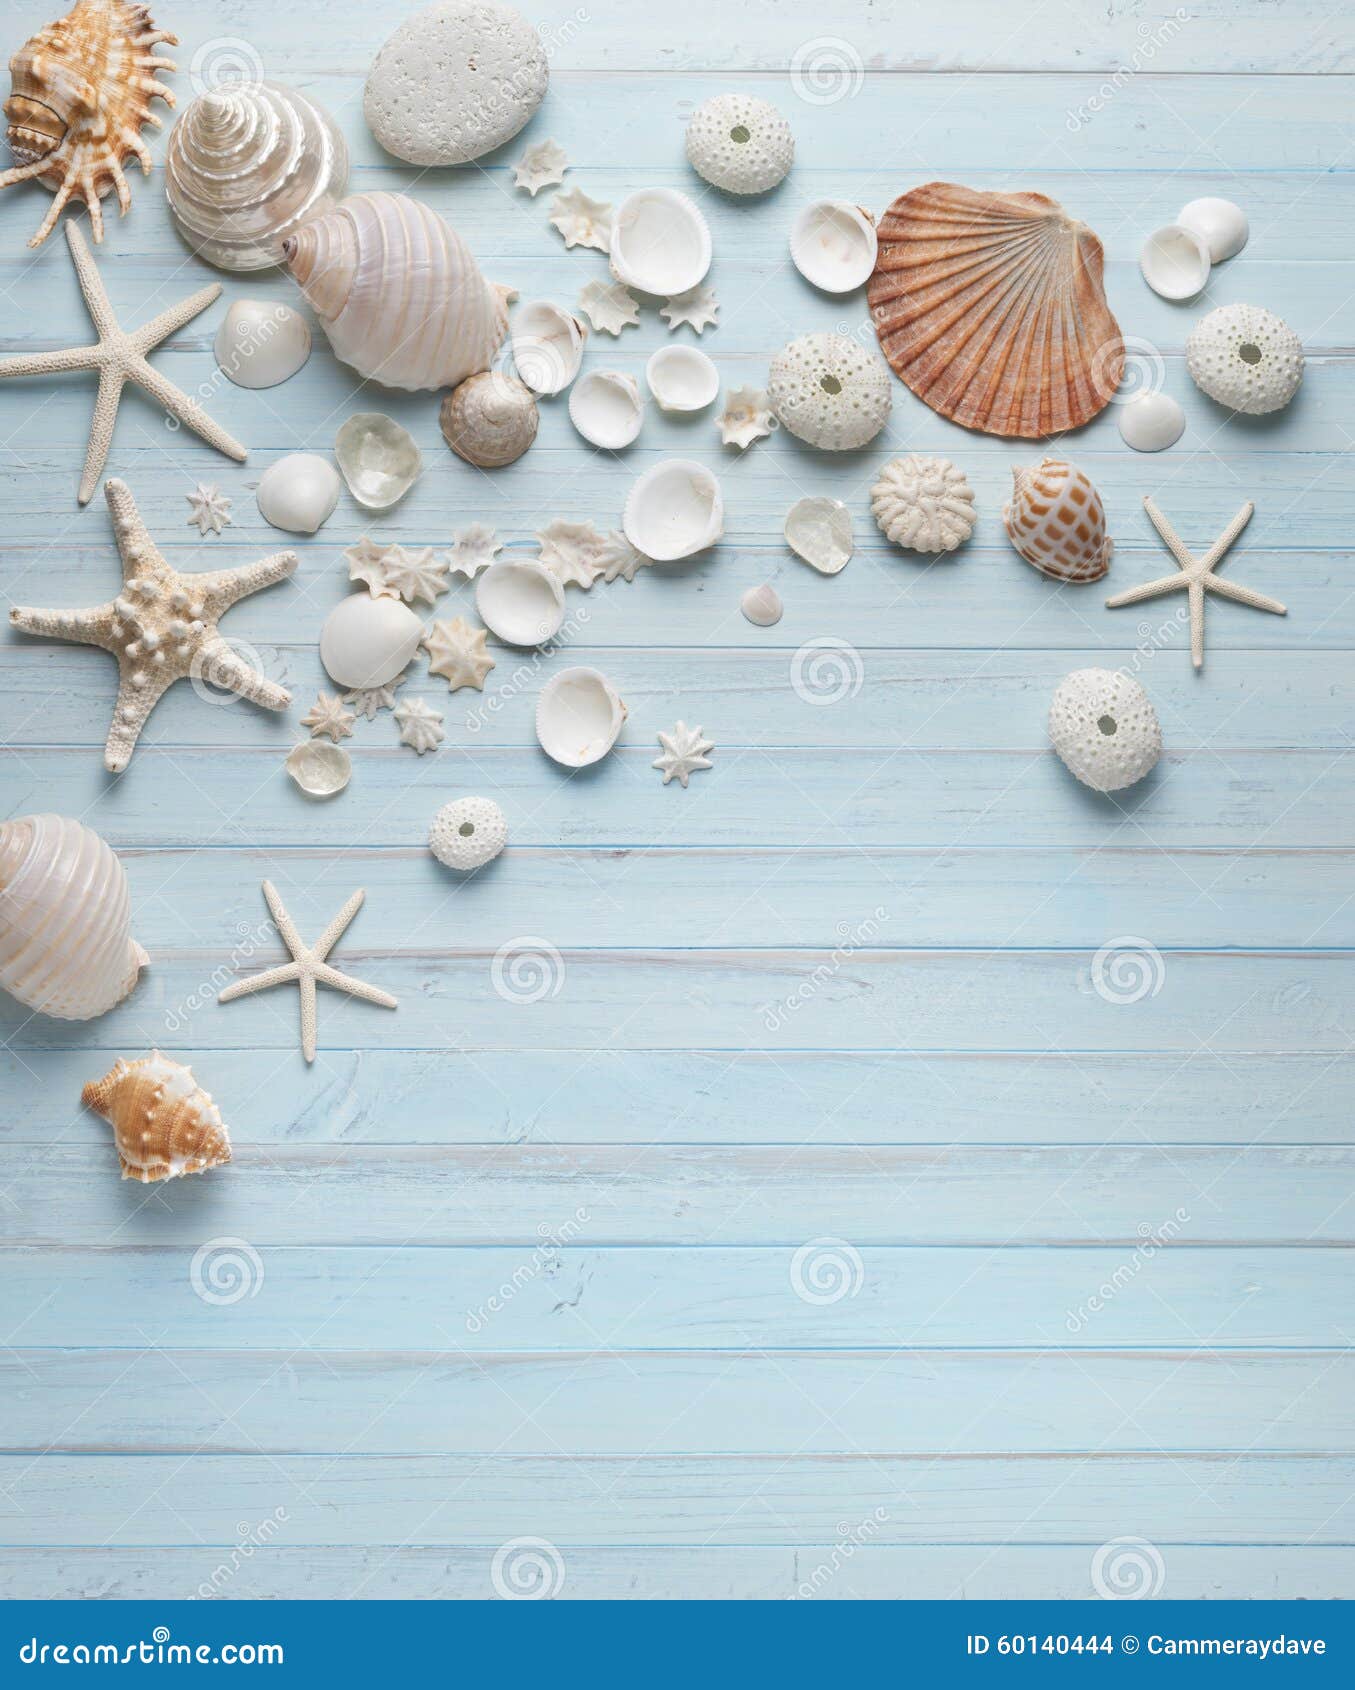 shells blue wood background